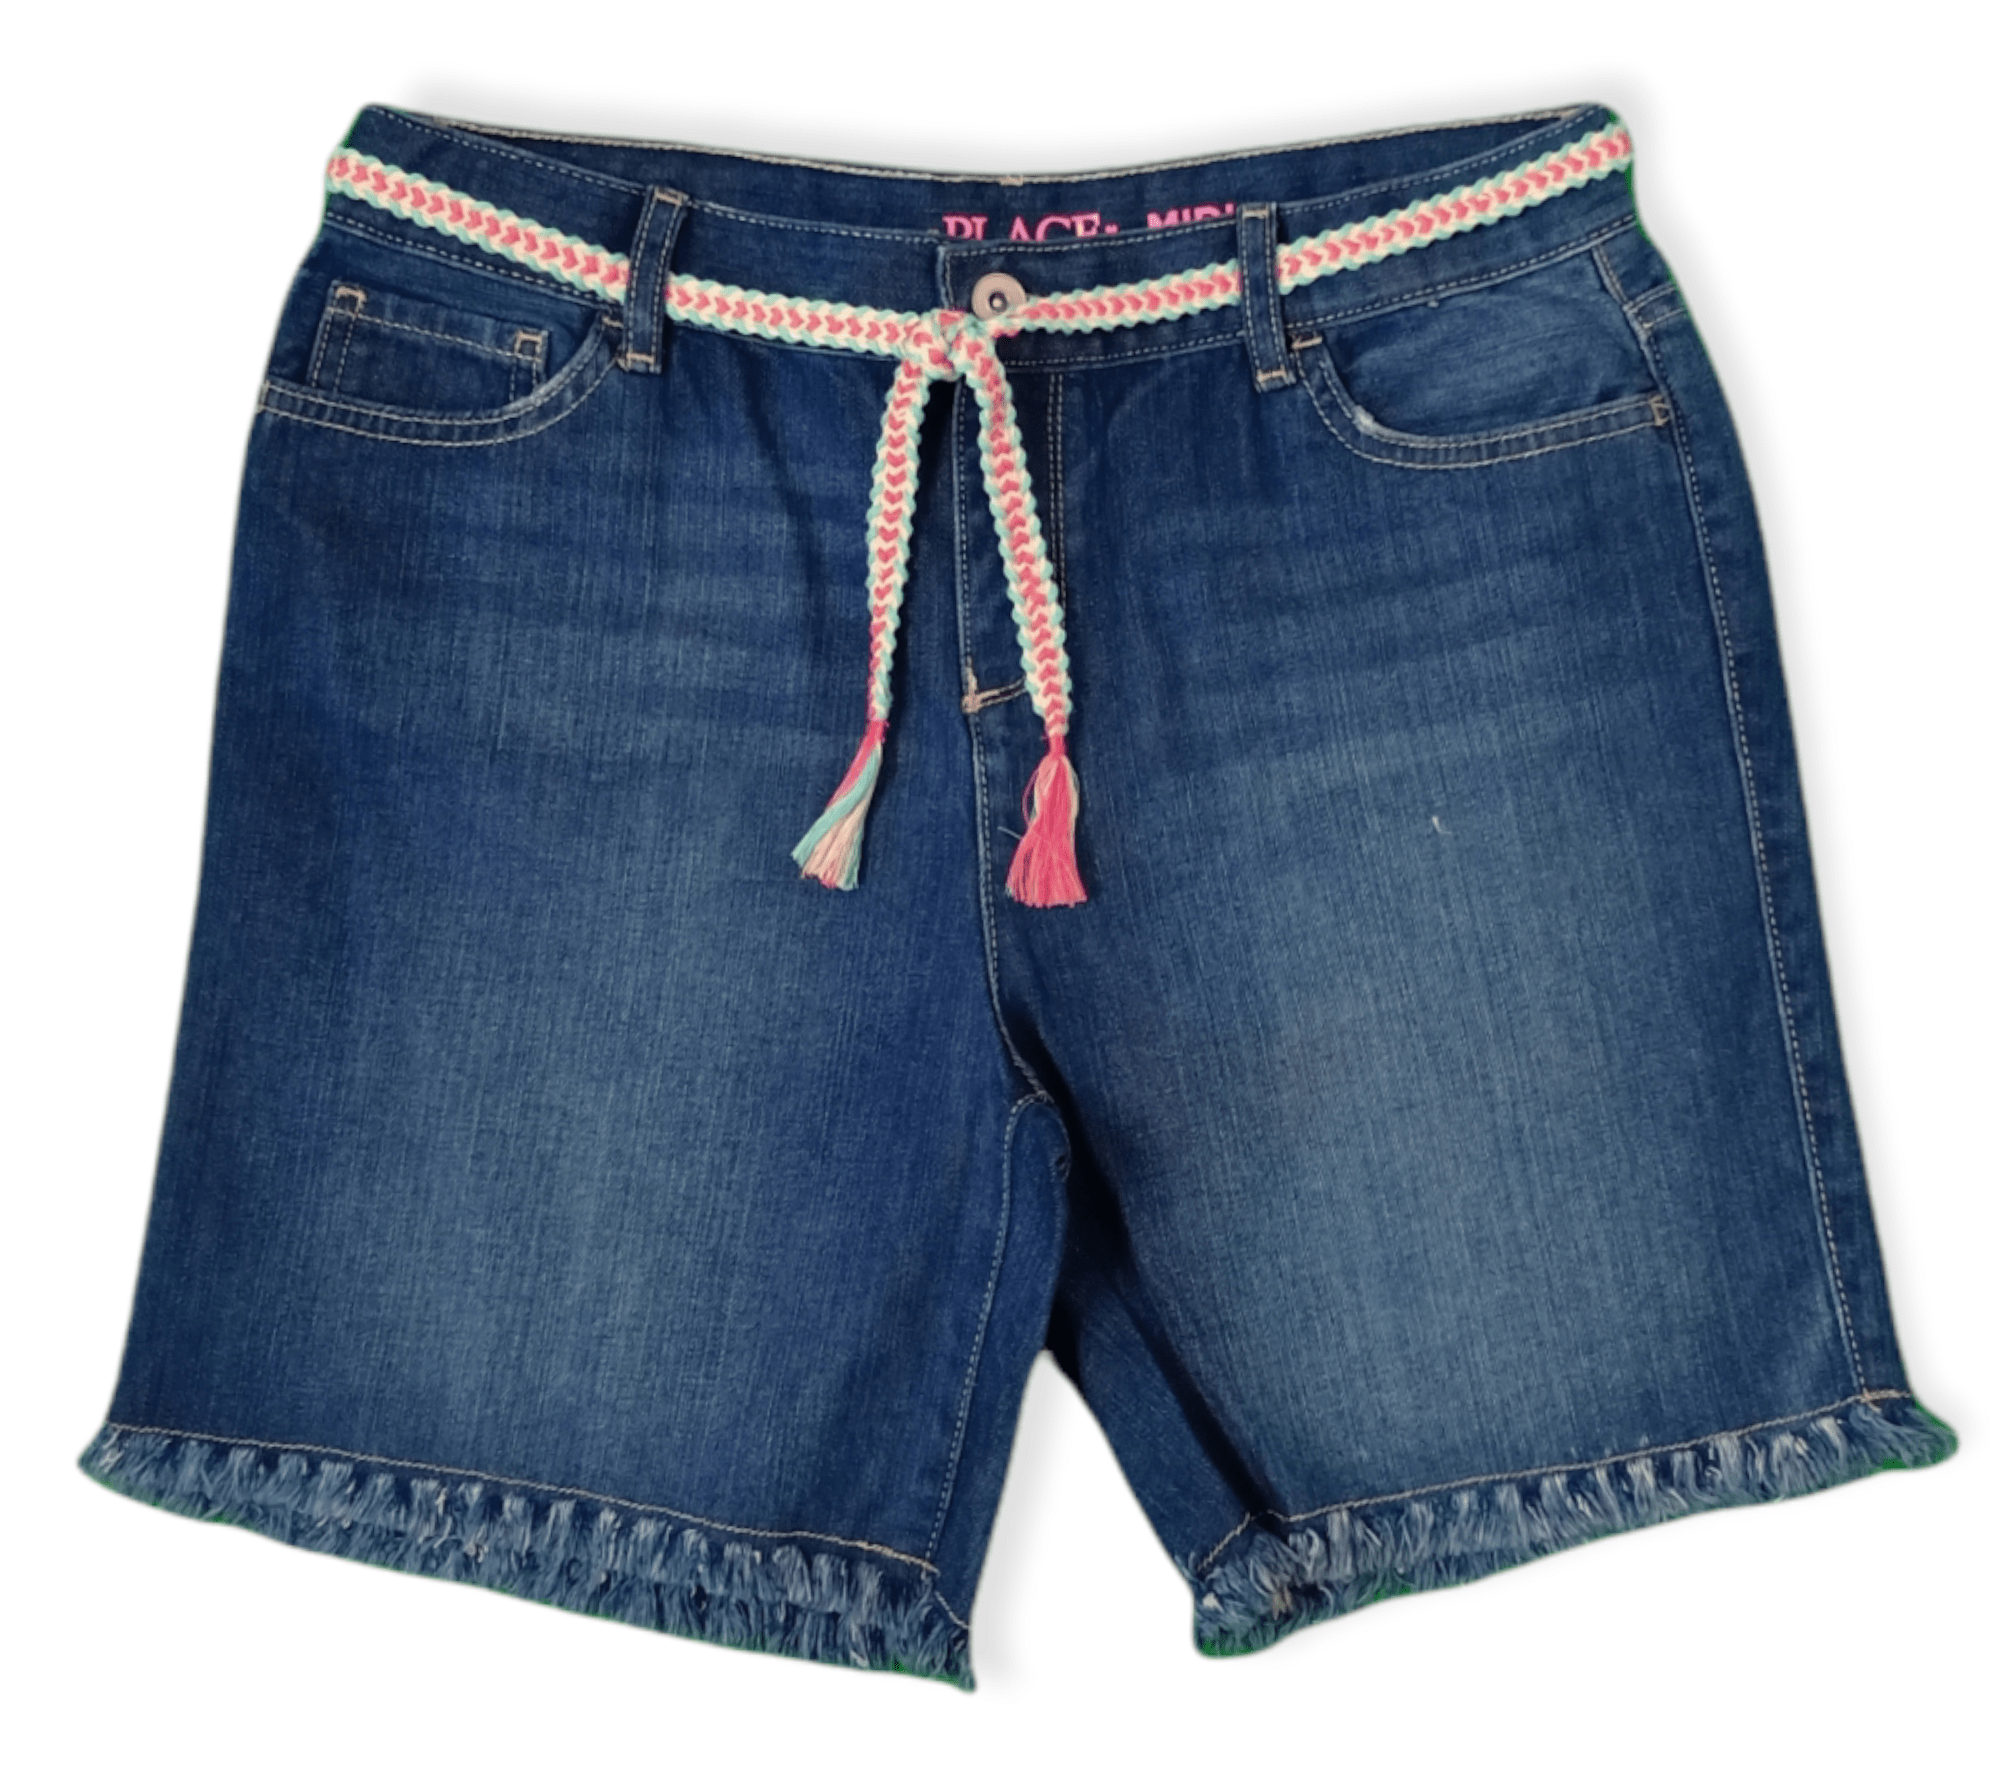 ElOutlet-Sumer Kids Kids Shorts [Kids] Girls Short - Place - Dark Blue Jeans with Braided belt